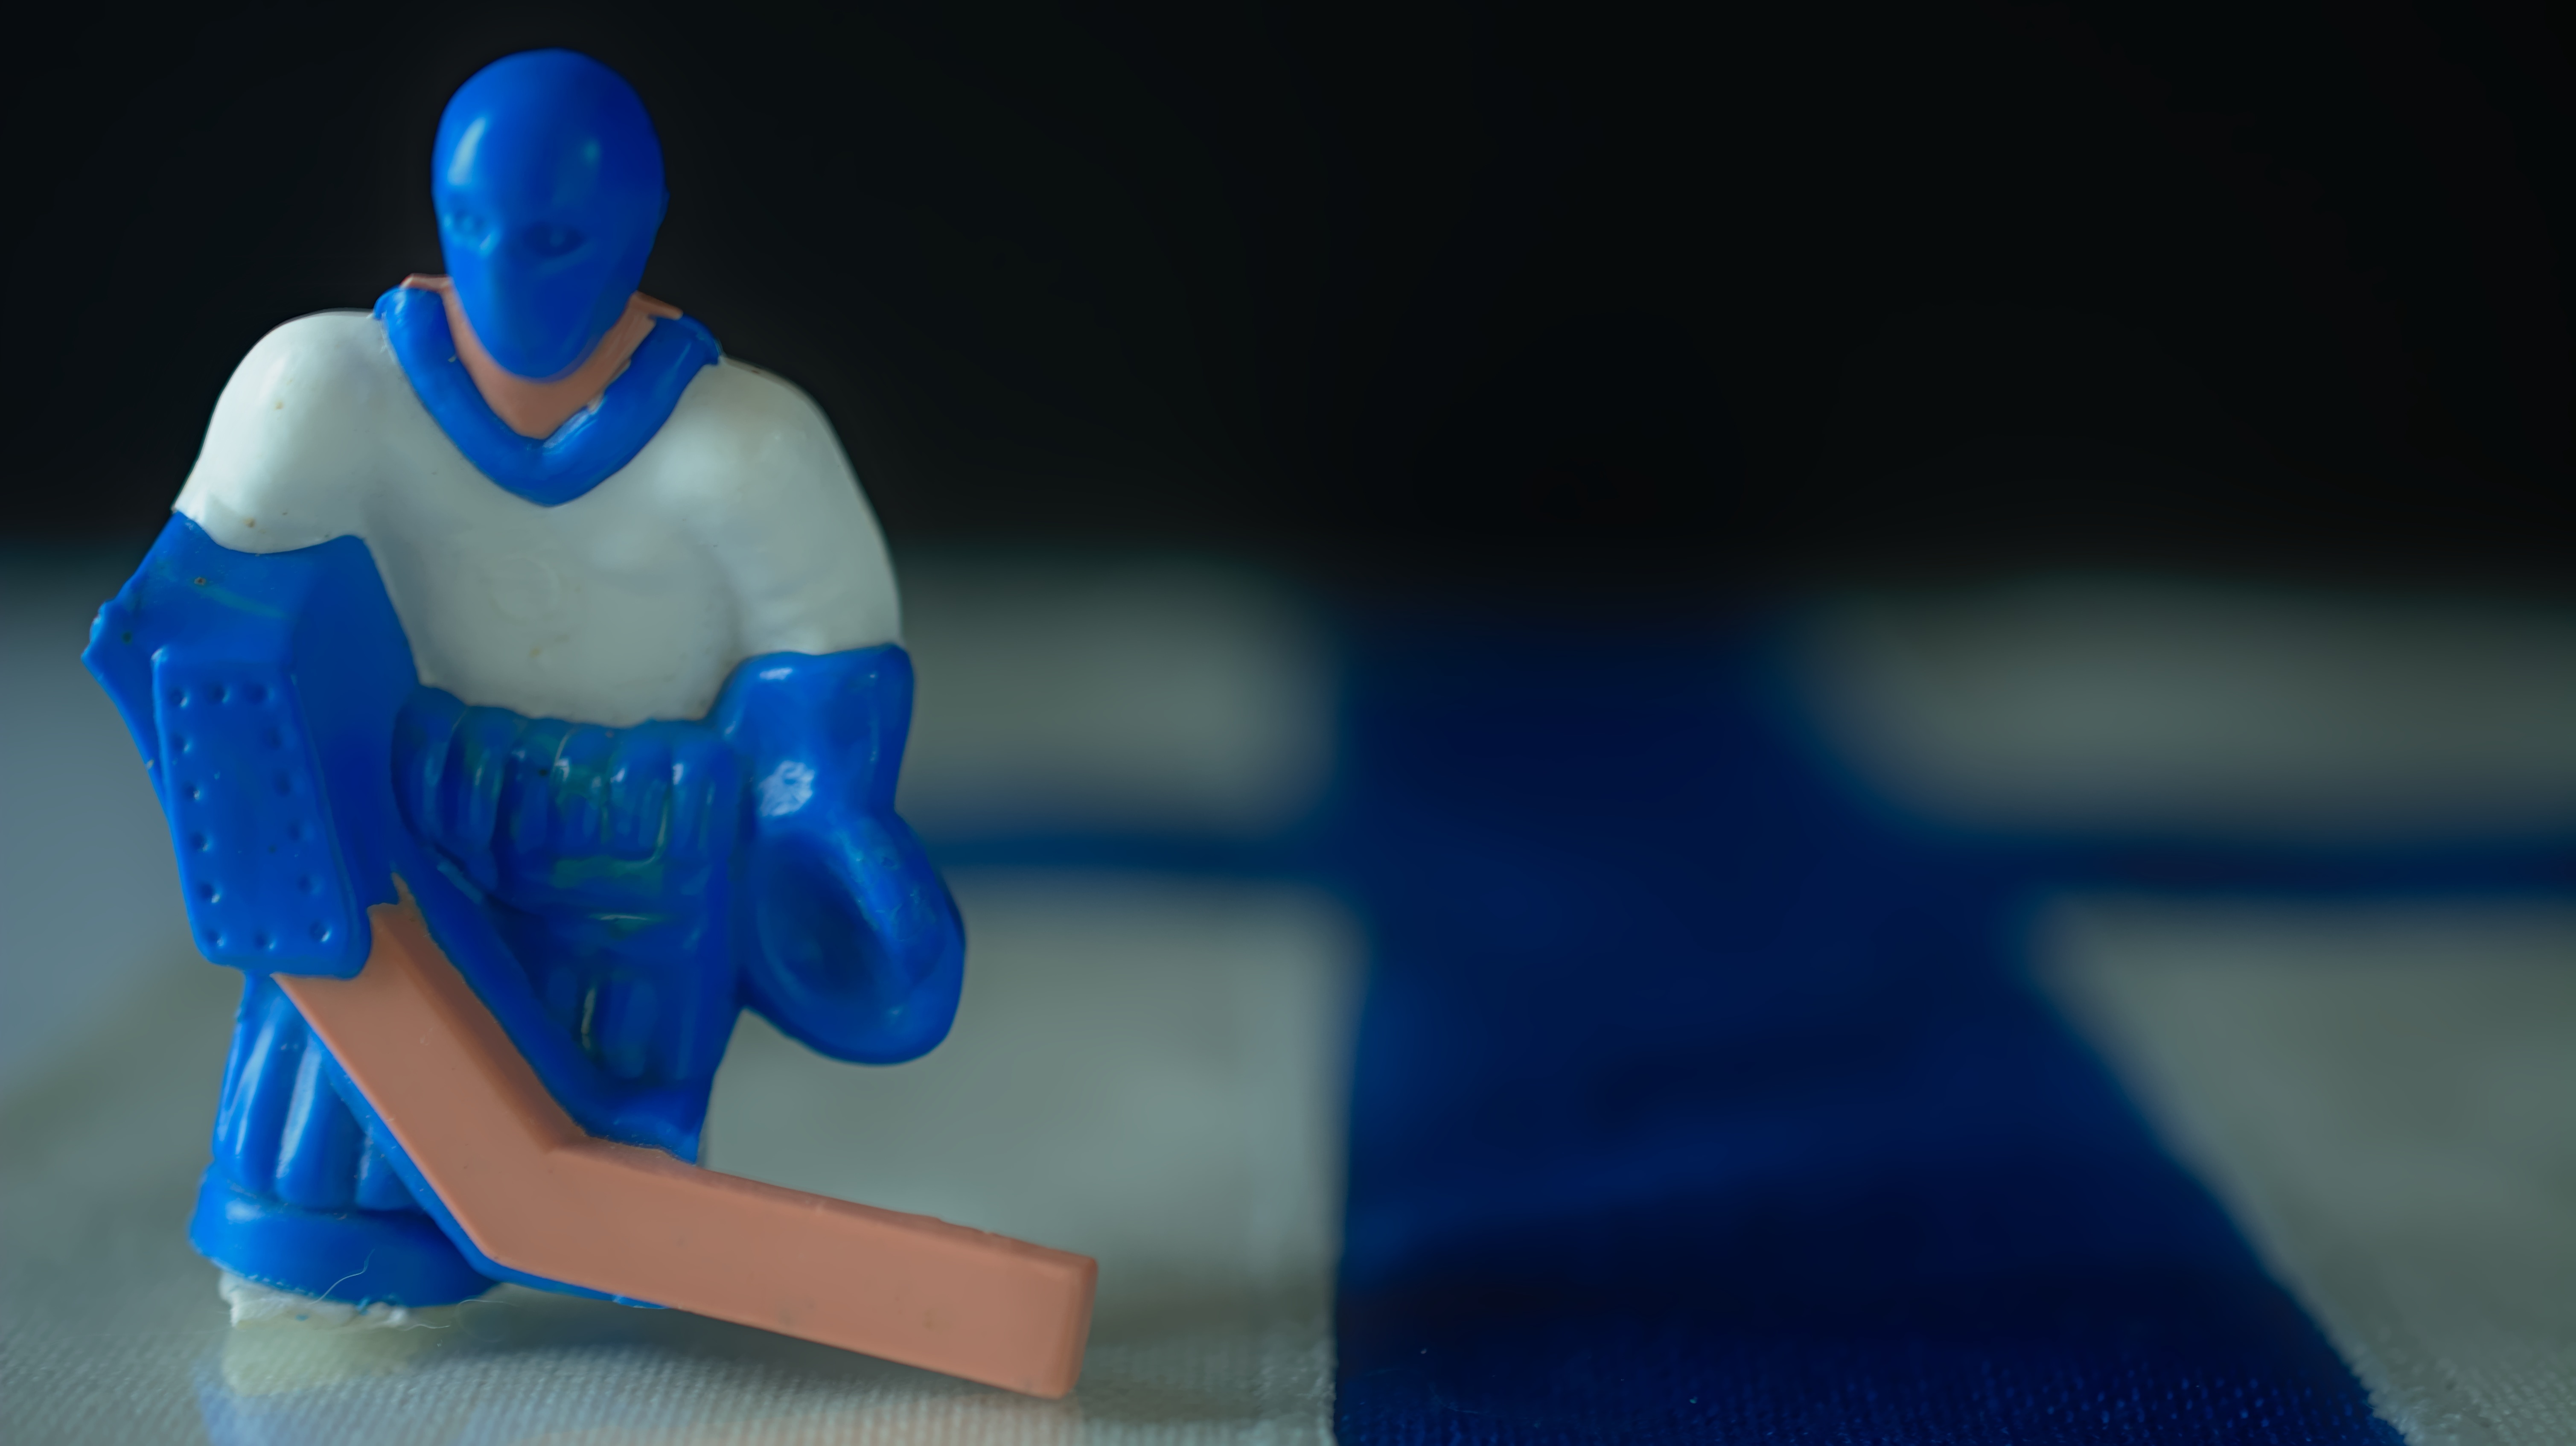 white and blue ice hockey player plastic figurine